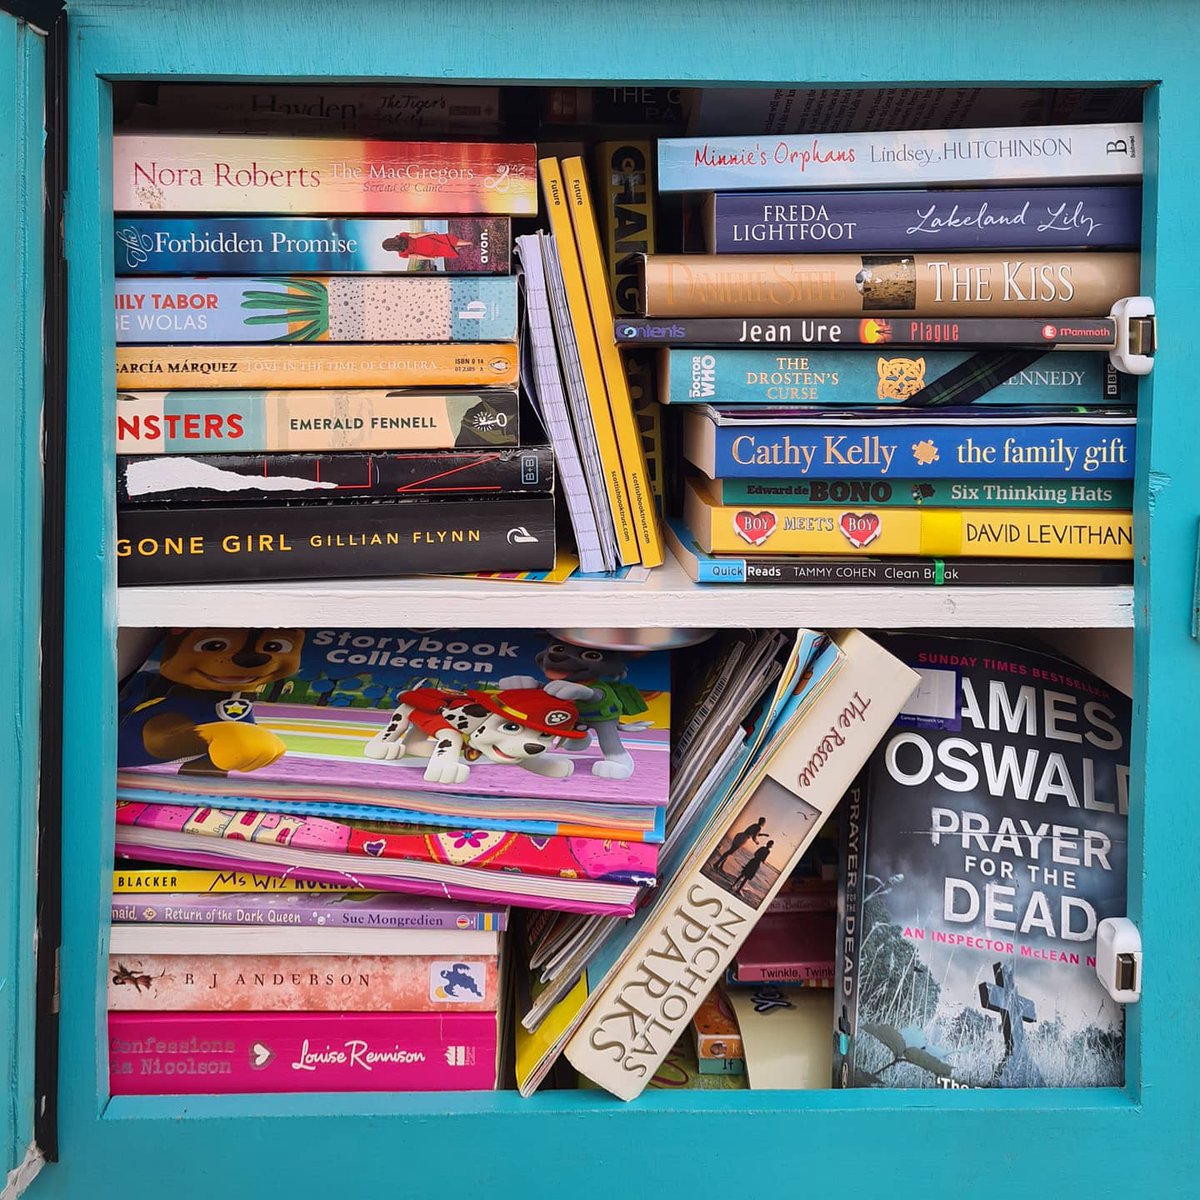 Anyone for a game of book jenga? 

#MiniBookShare #Dunfermline #ShineOnFife #TakeABookLeaveABook #UnitedByBooks #CommunityLibrary #Shelfie #IBelieveInBookFairies #LoveBooks #VisitFife #DiscoverFife #DunfermlineLovesLocal #BookstagramScotland #BeBraw #ScotlandIsNow